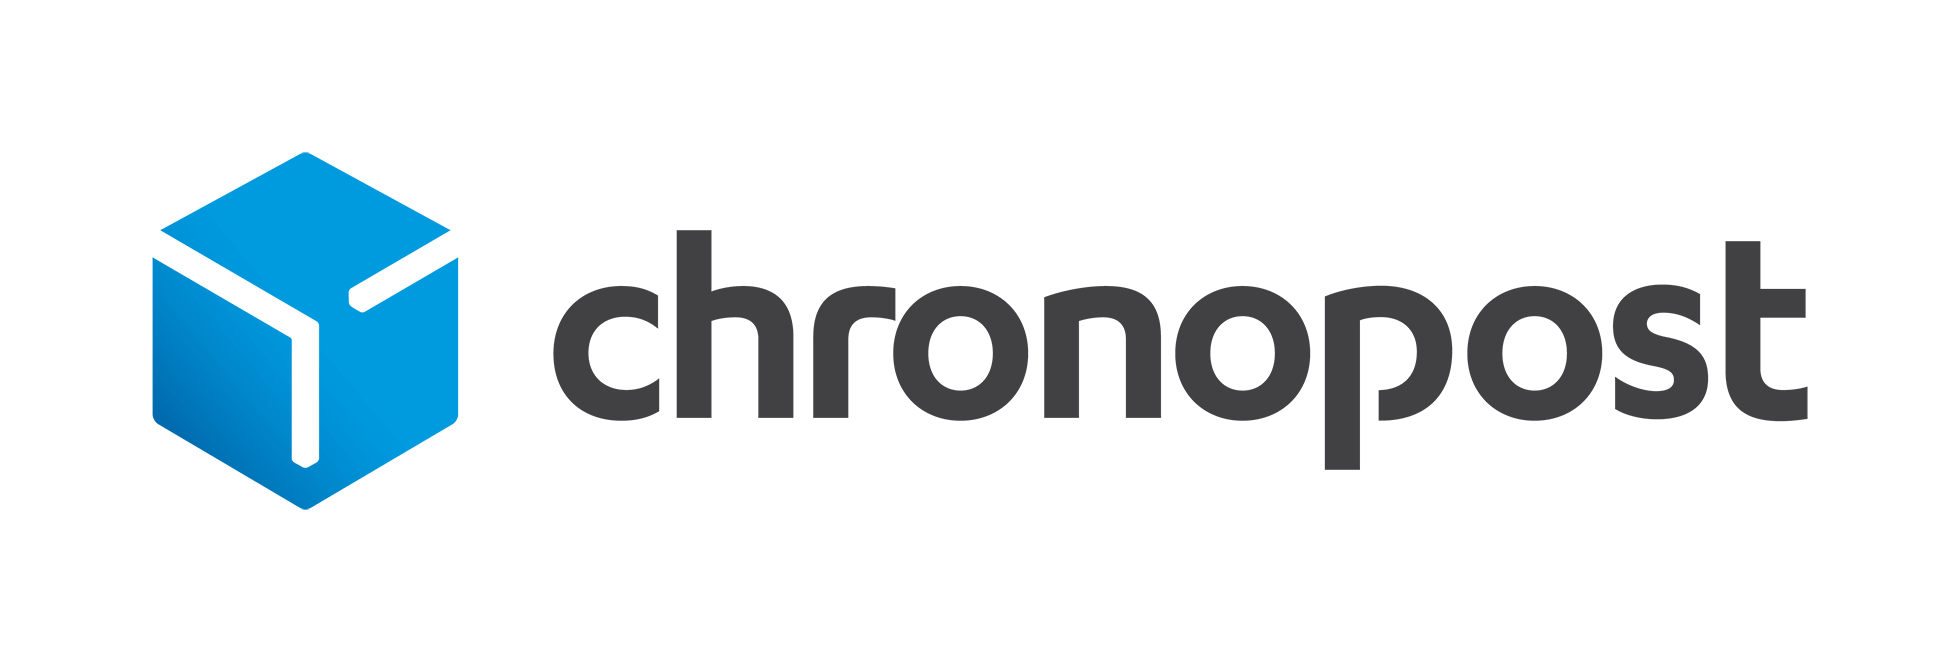 20181201224334!Chronopost_logo_2015.png